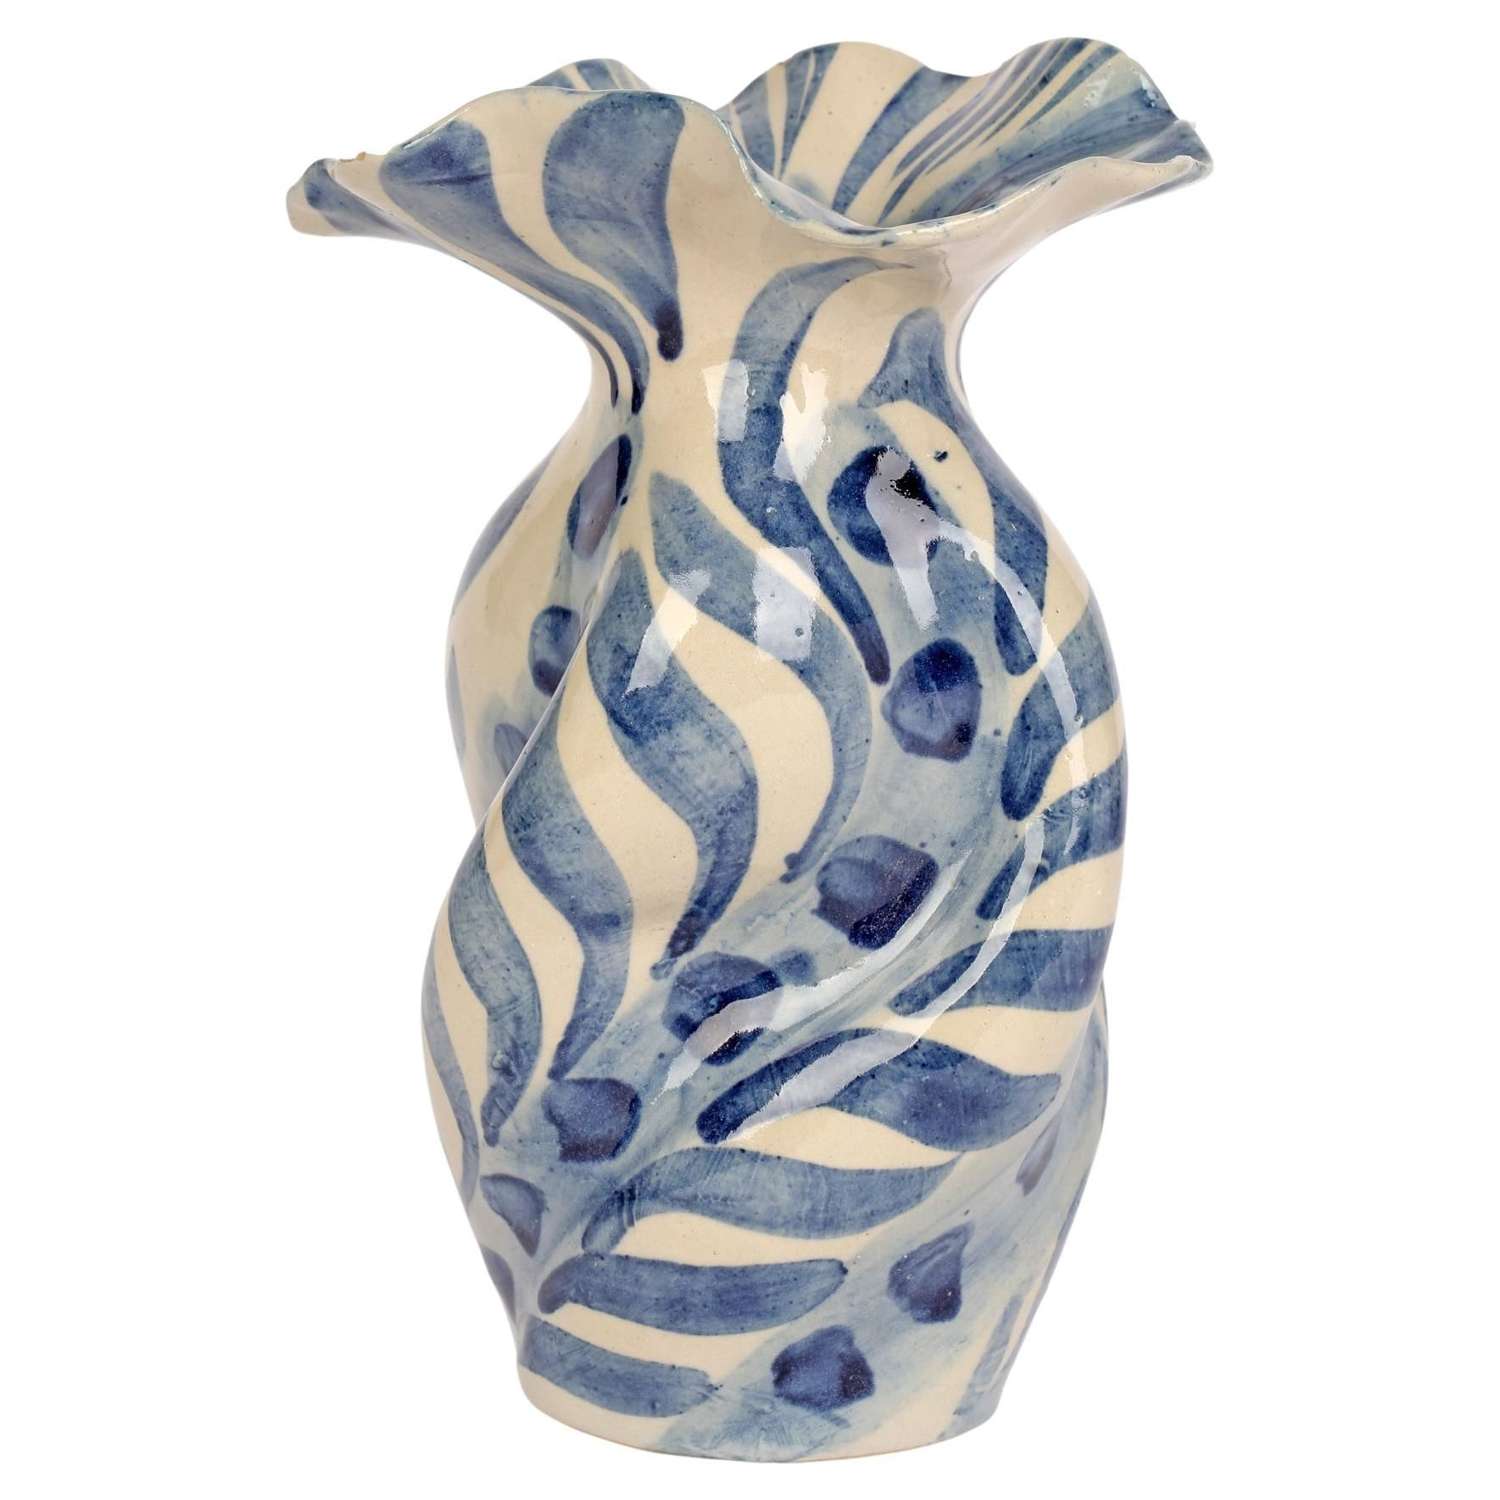 Horace Elliott London Arts & Crafts Studio Pottery Blue Flower Vase